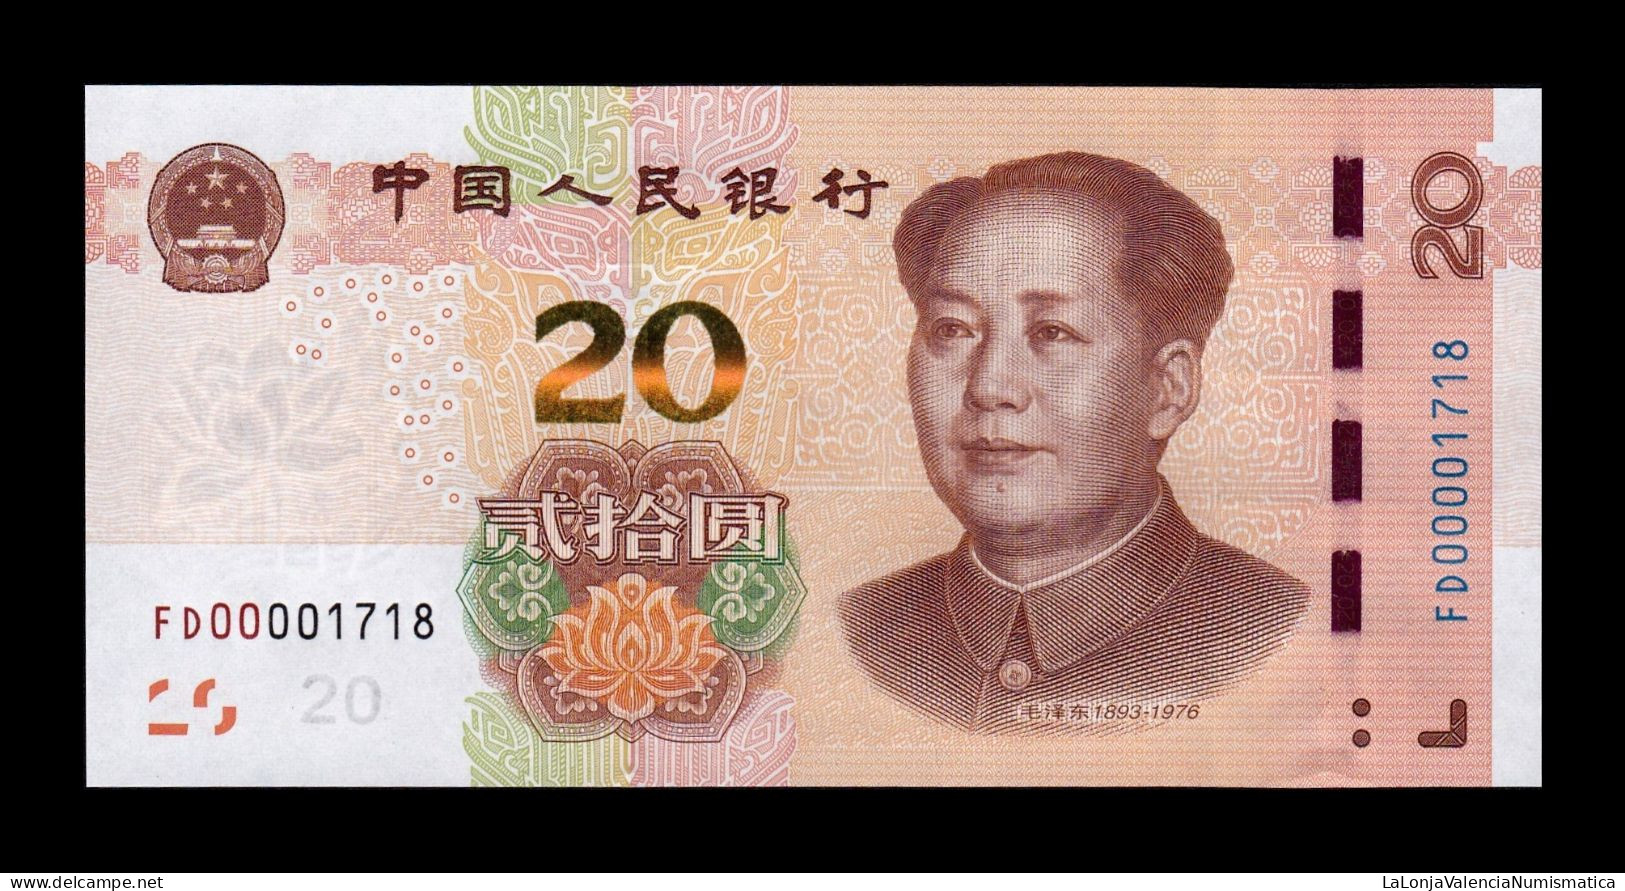 China 20 Yuan Mao Tse-Tung 2019 Pick 915 Sc Unc - China